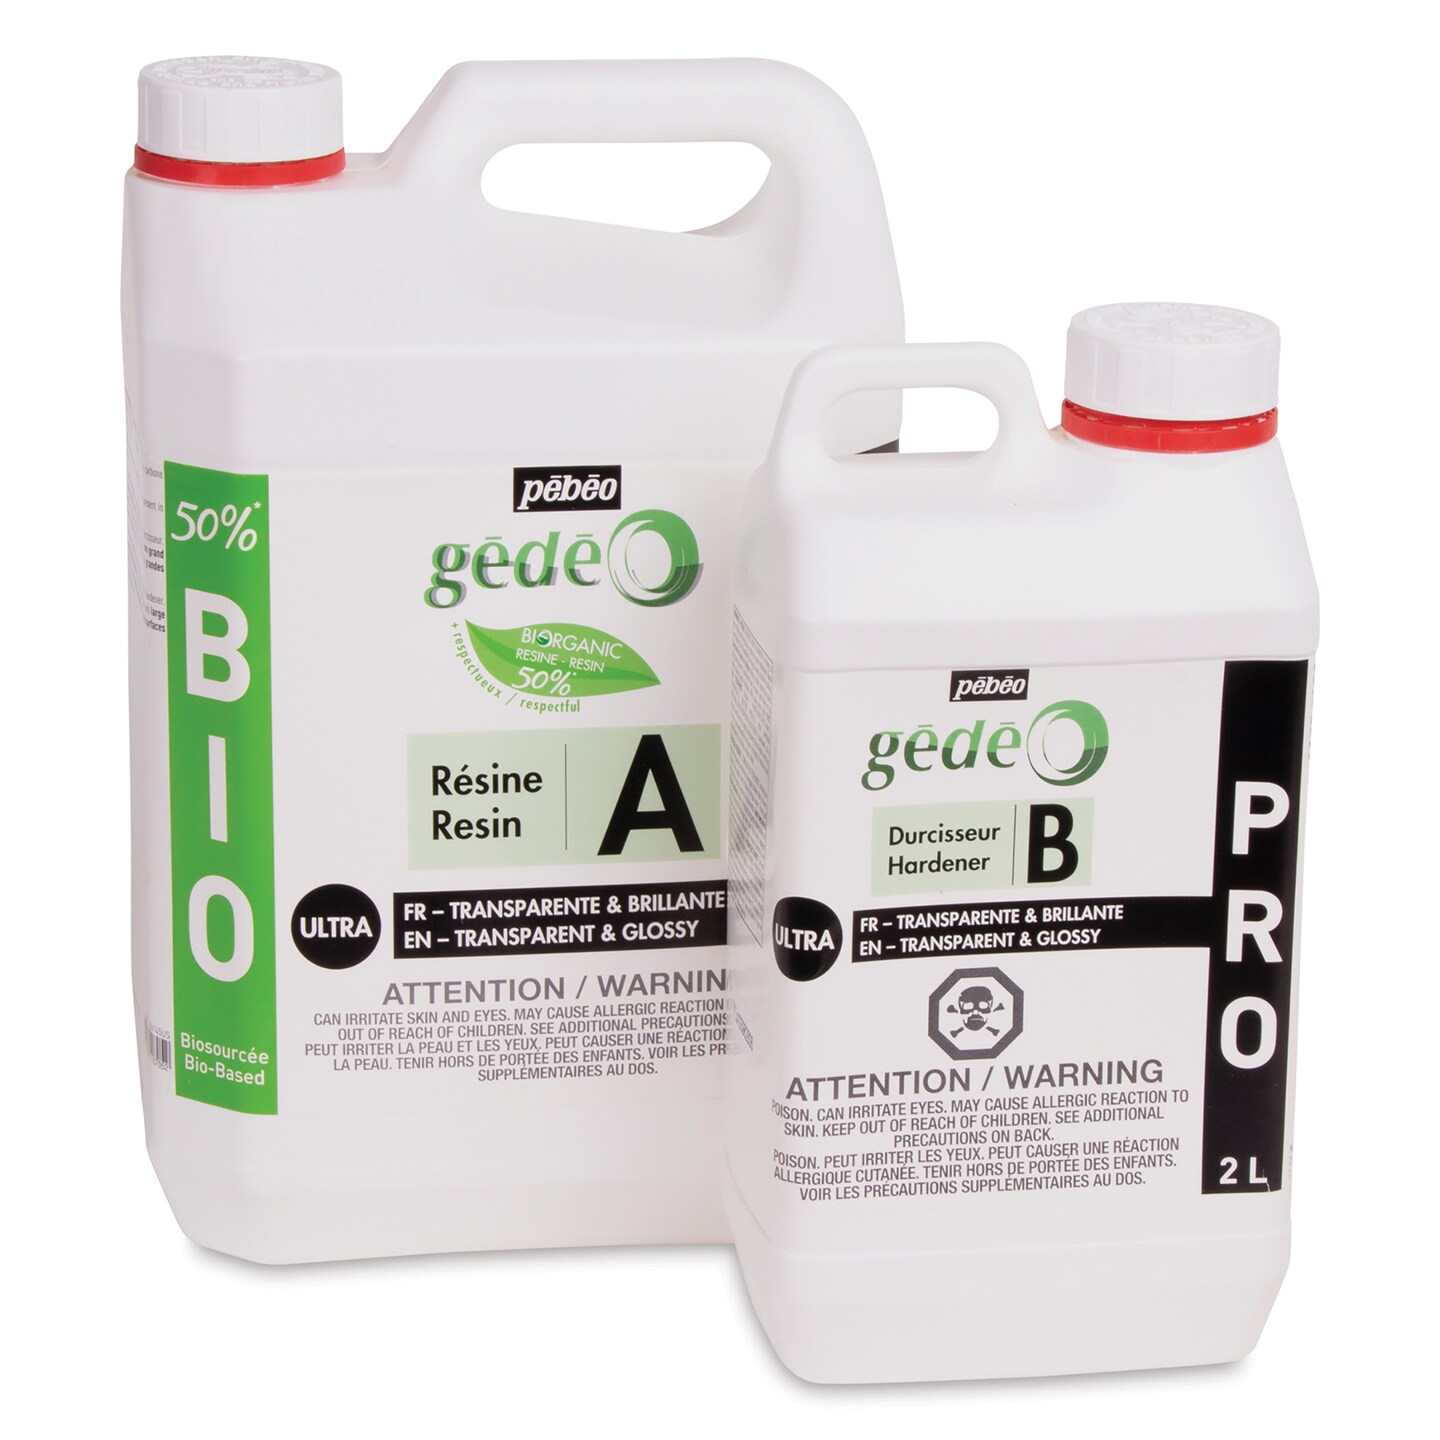 Pebeo Gedeo Bio-Based Resin - Pro Resin, 6 L